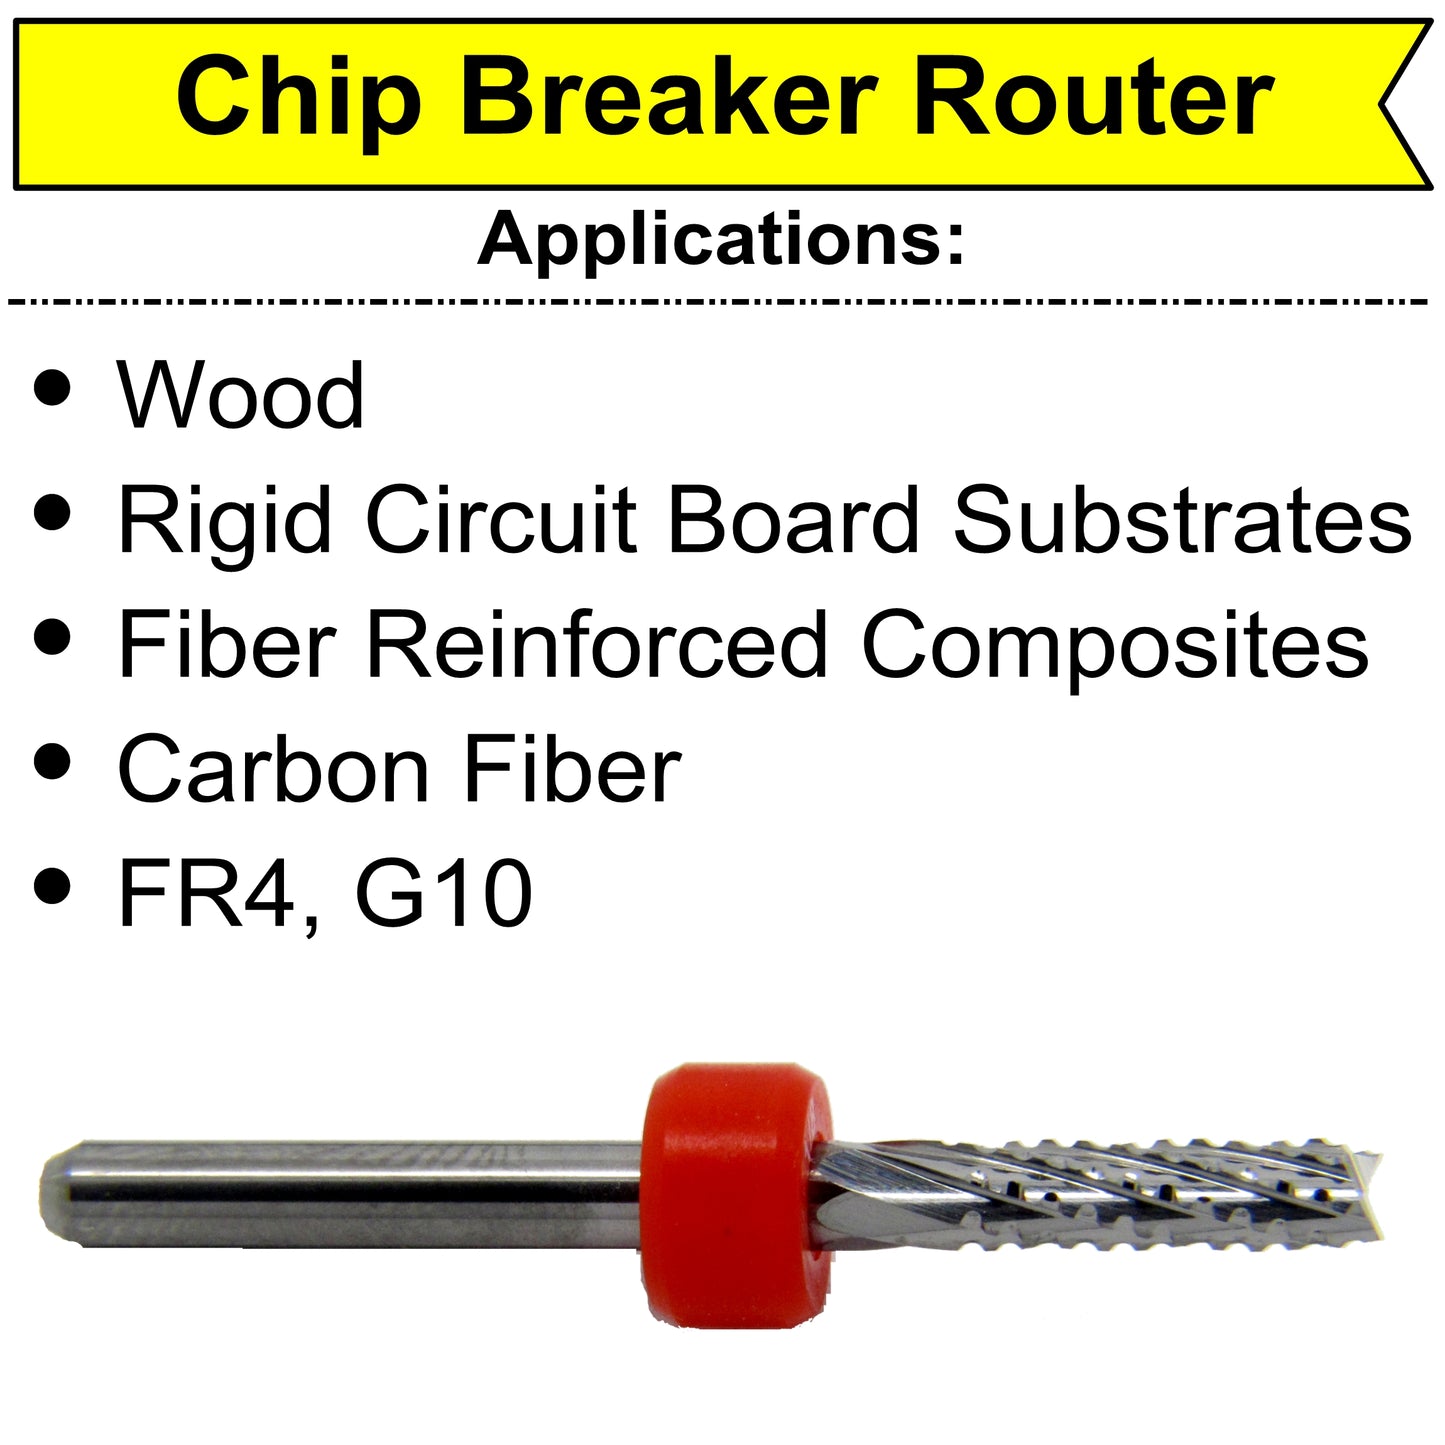 .0785" - 2.00mm Chip Breaker Carbide Router - Fishtail Tip .425" Depth R165